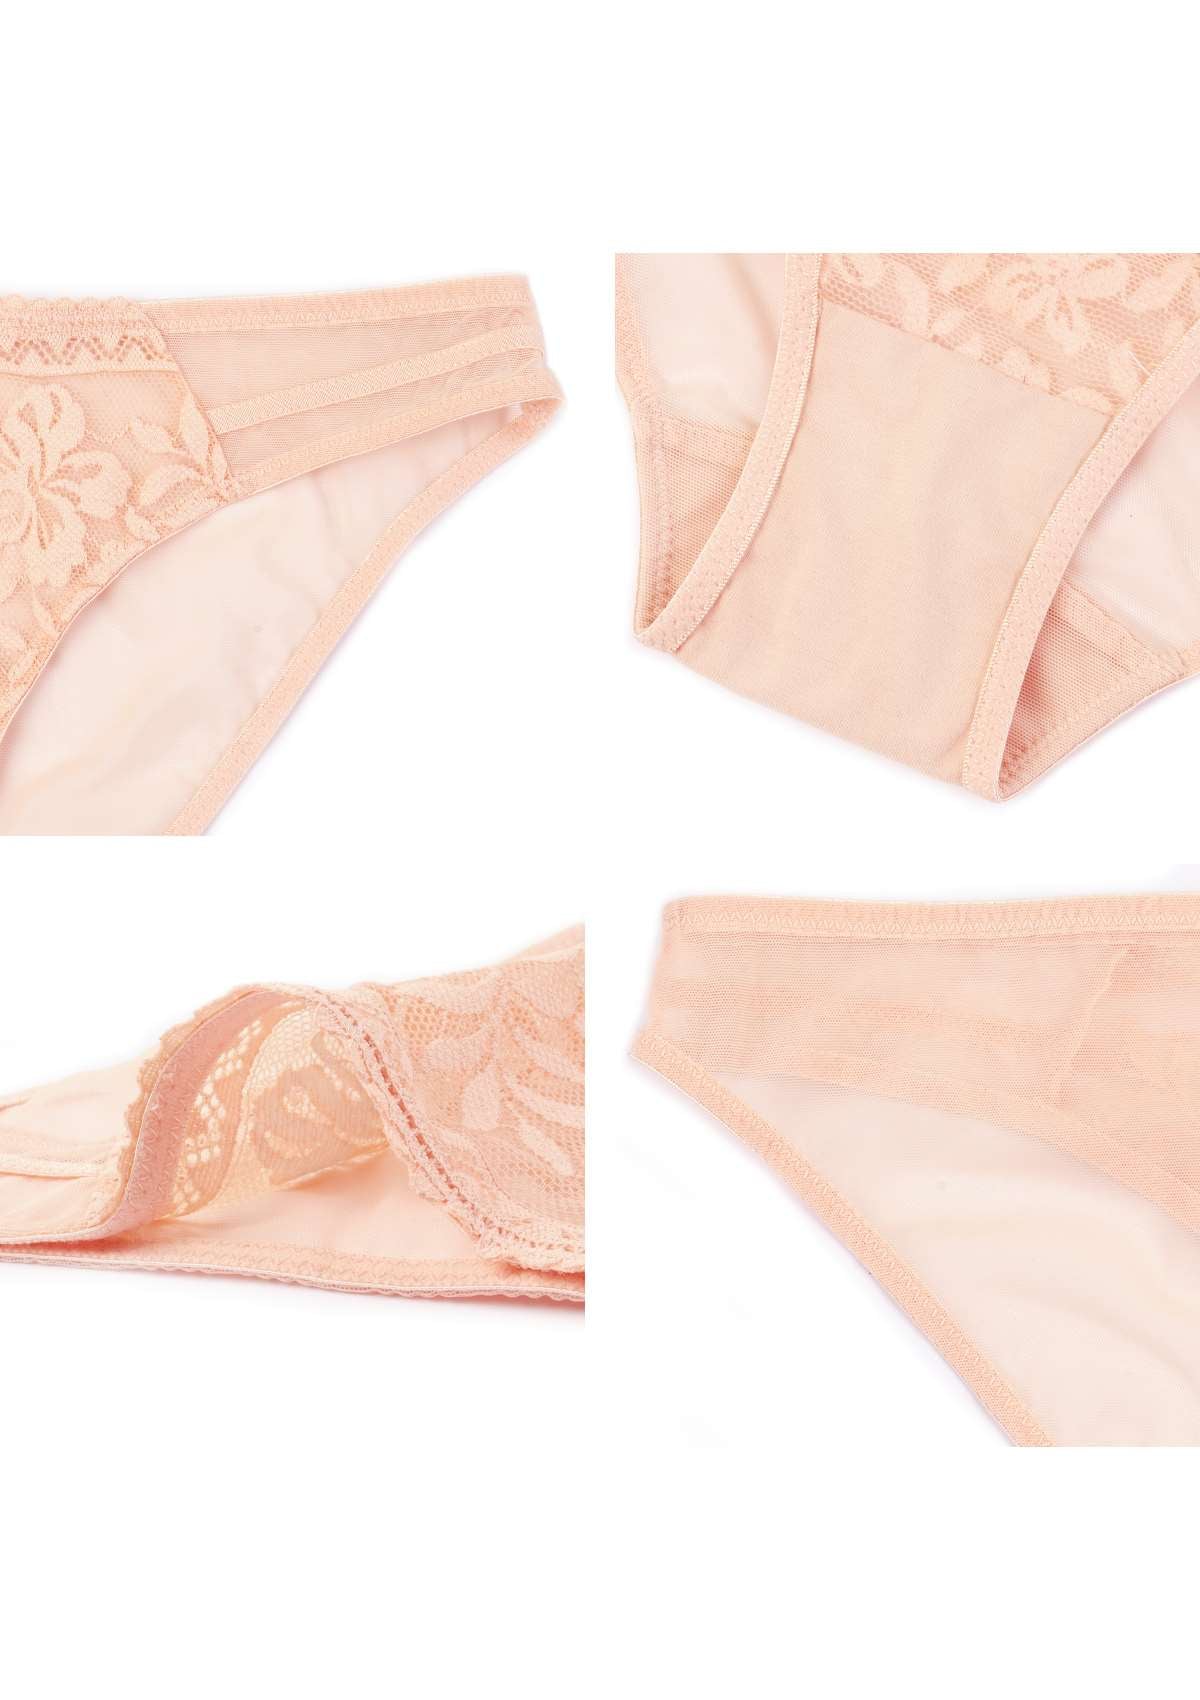 HSIA Gladioli Floral Lace Mesh Airy Elegant Beautiful Bikini Underwear - L / Peach